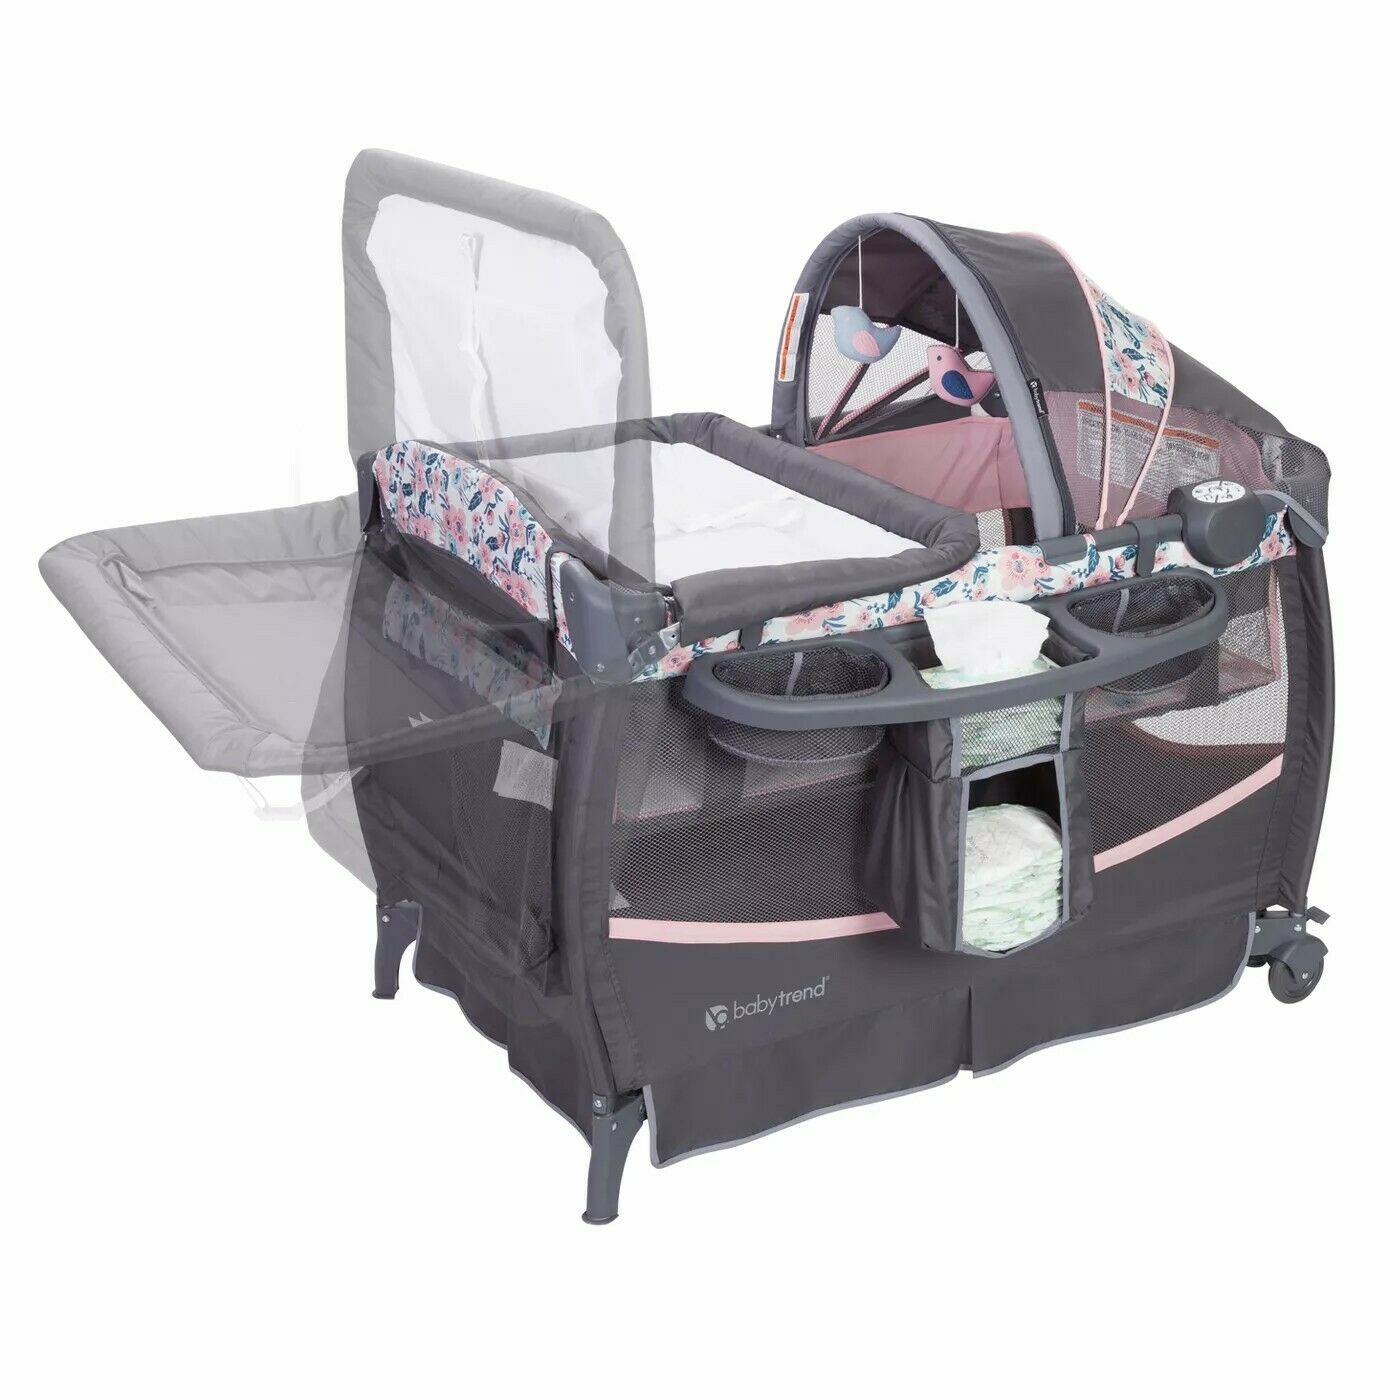 Girls Baby Stroller Car Seat Travel System High Chair Playard Newborn Bouncer